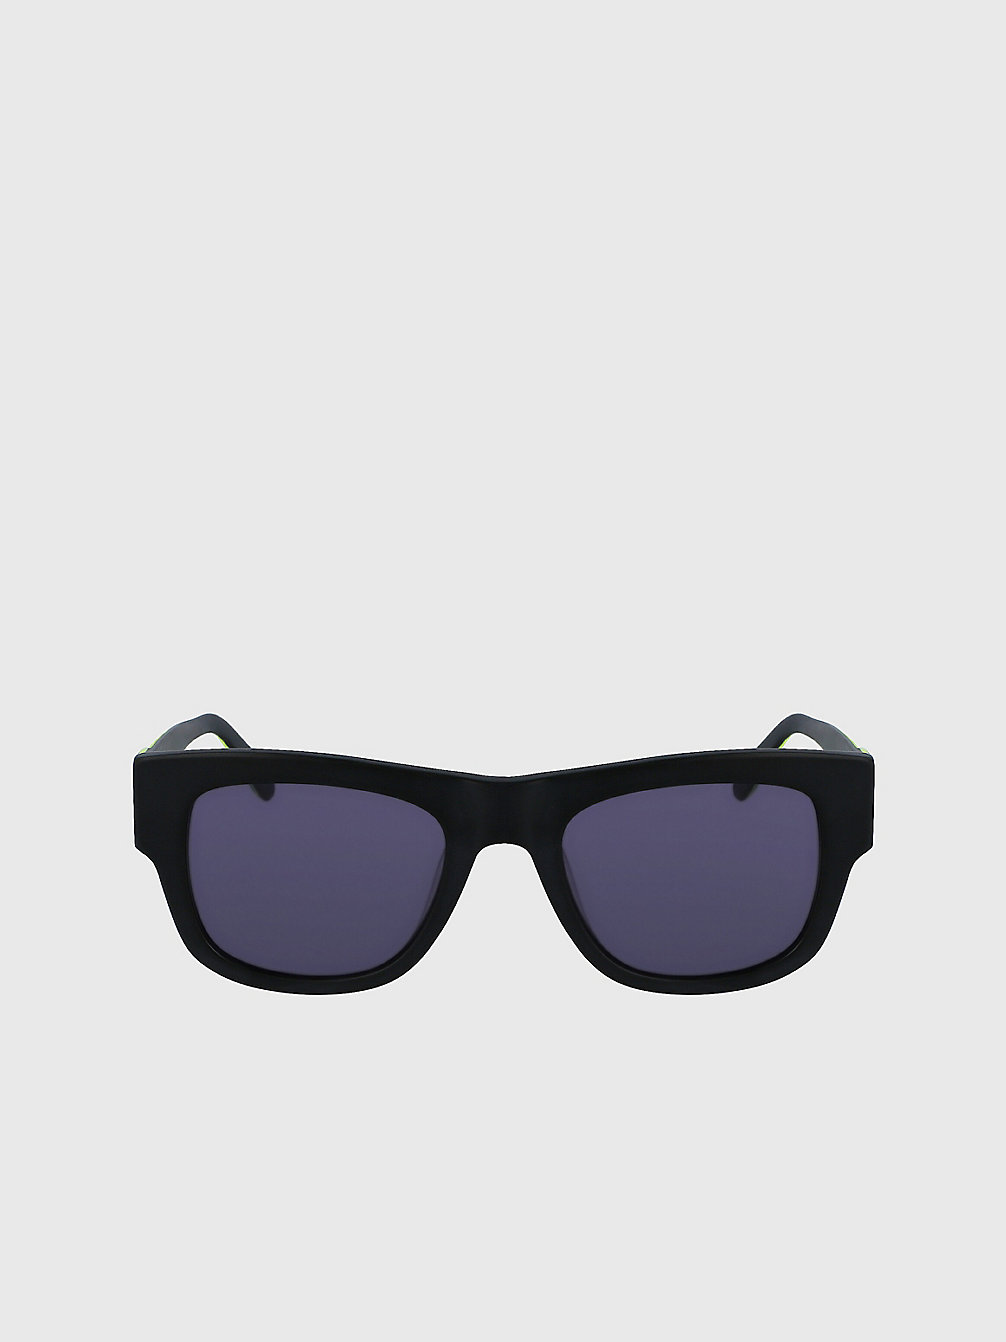 MATTE BLACK > Прямоугольные солнцезащитные очки Ckj22637s > undefined unisex - Calvin Klein